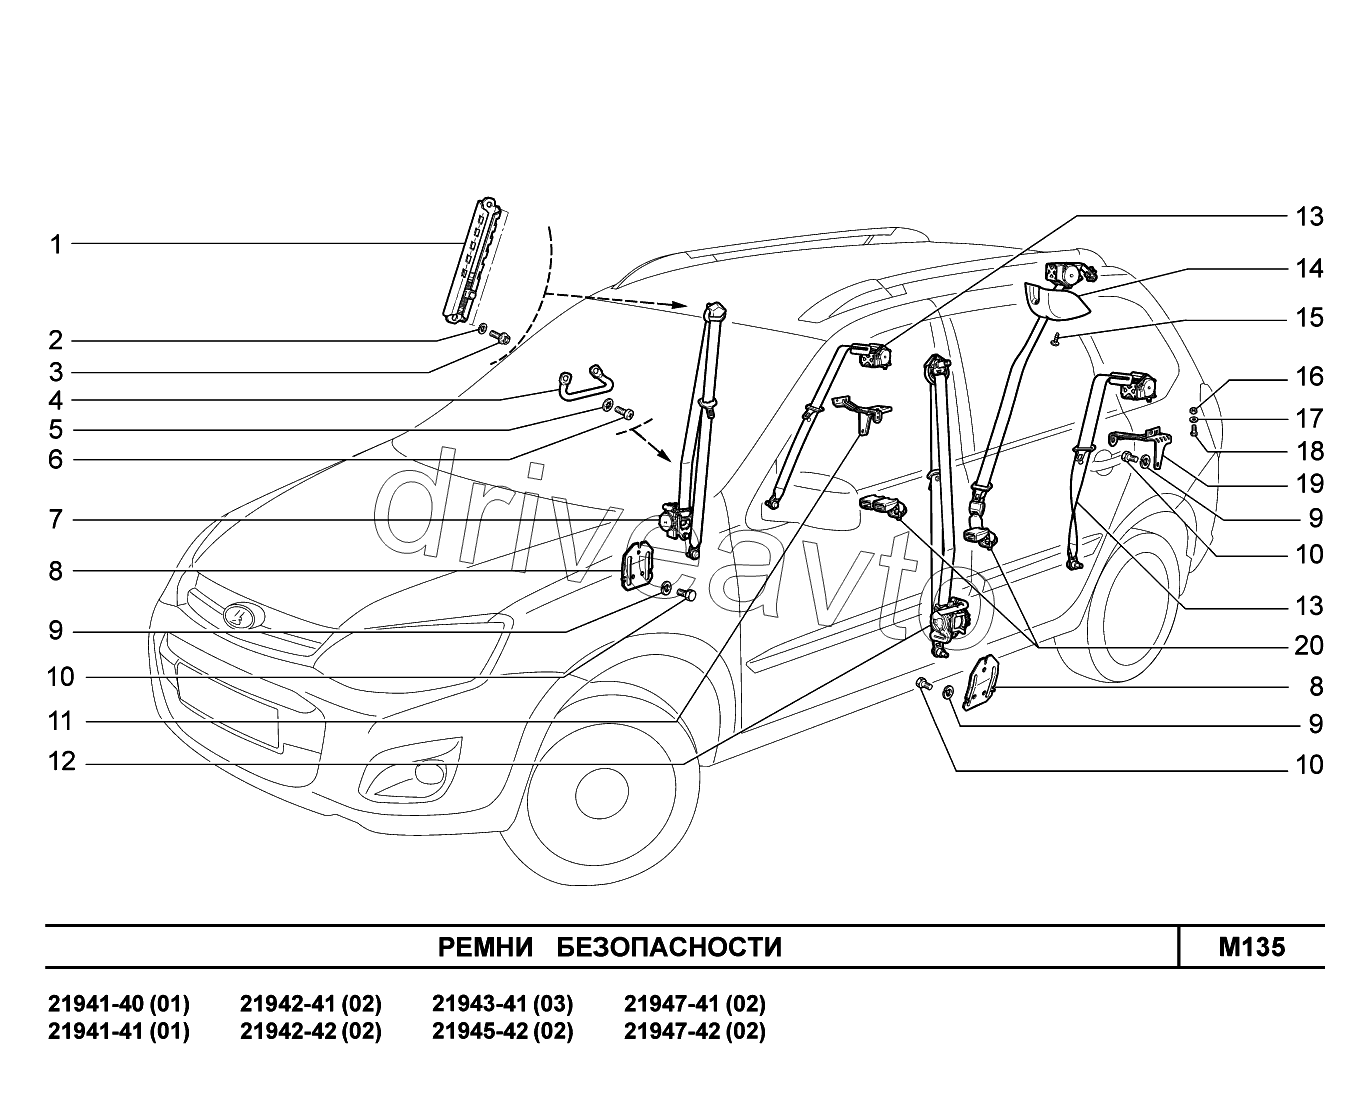 M135. Ремни безопасности